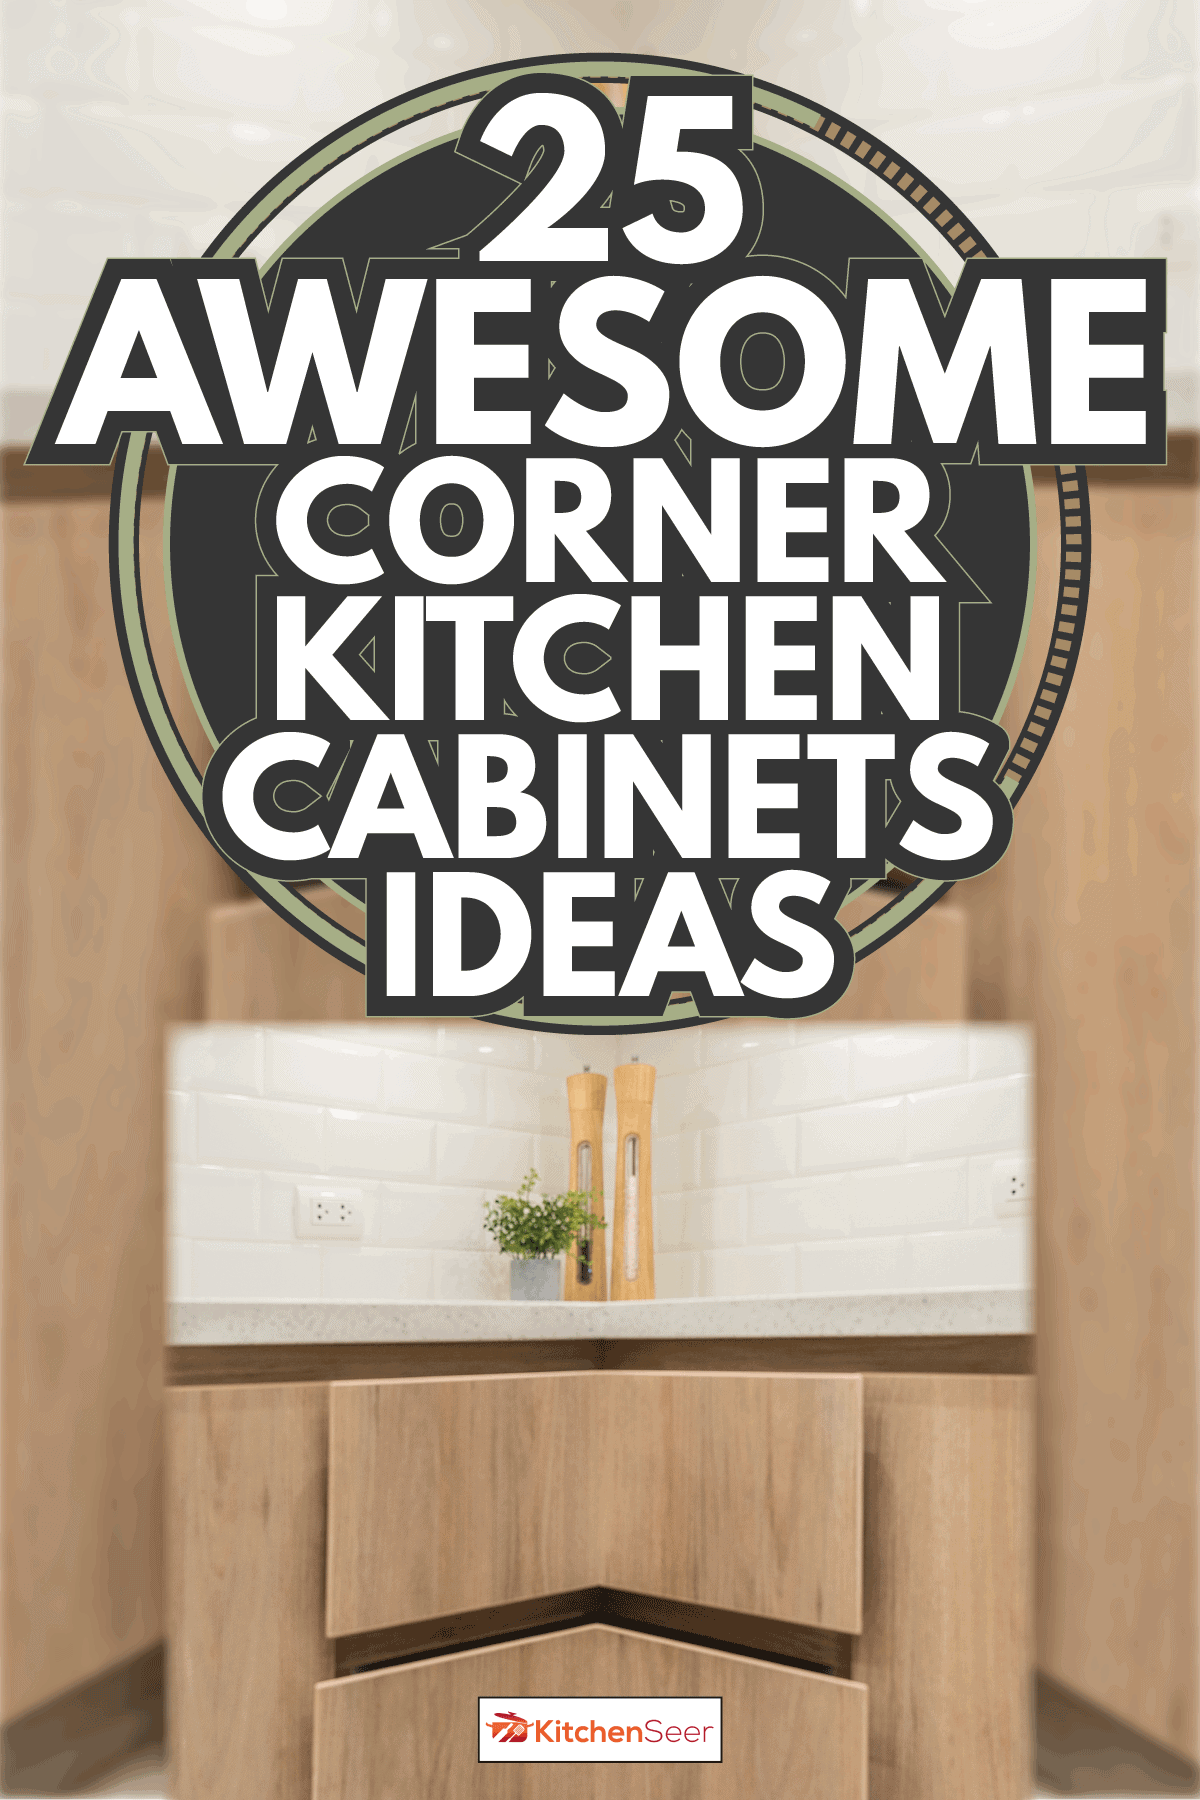 20 Awesome Corner Kitchen Cabinets Ideas   Kitchen Seer